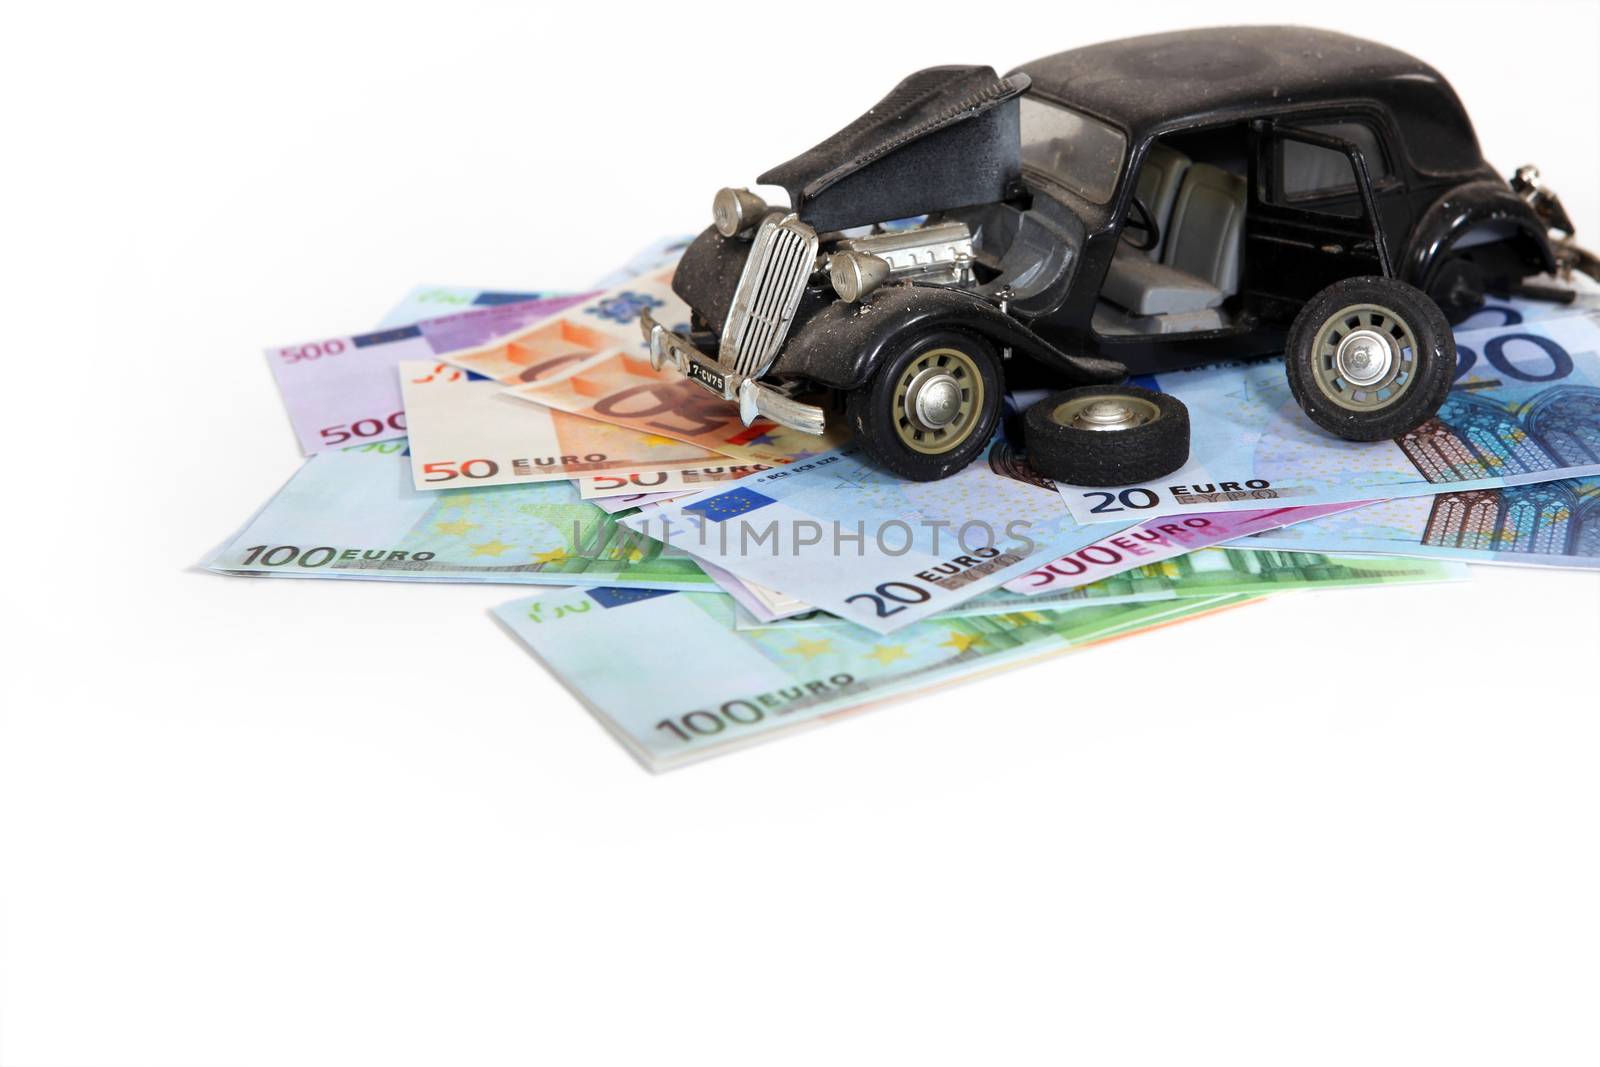 Symbolic broken car on top of cash